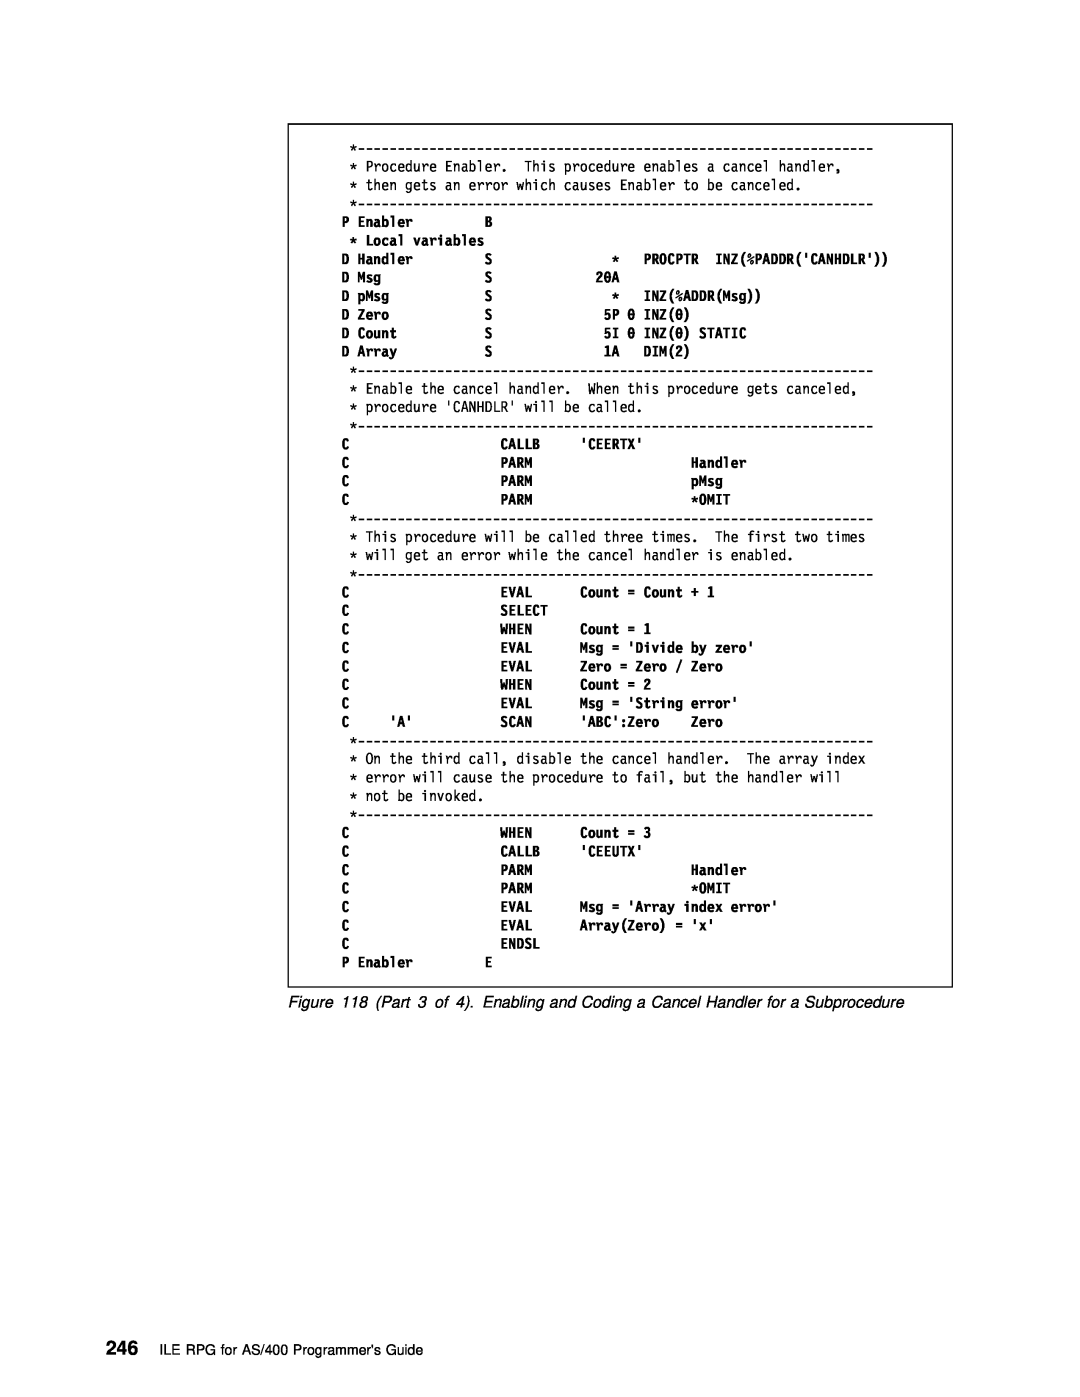 IBM AS/400 manual Procedure Enabler. This procedure enables a cancel handler, Part, 3 of 